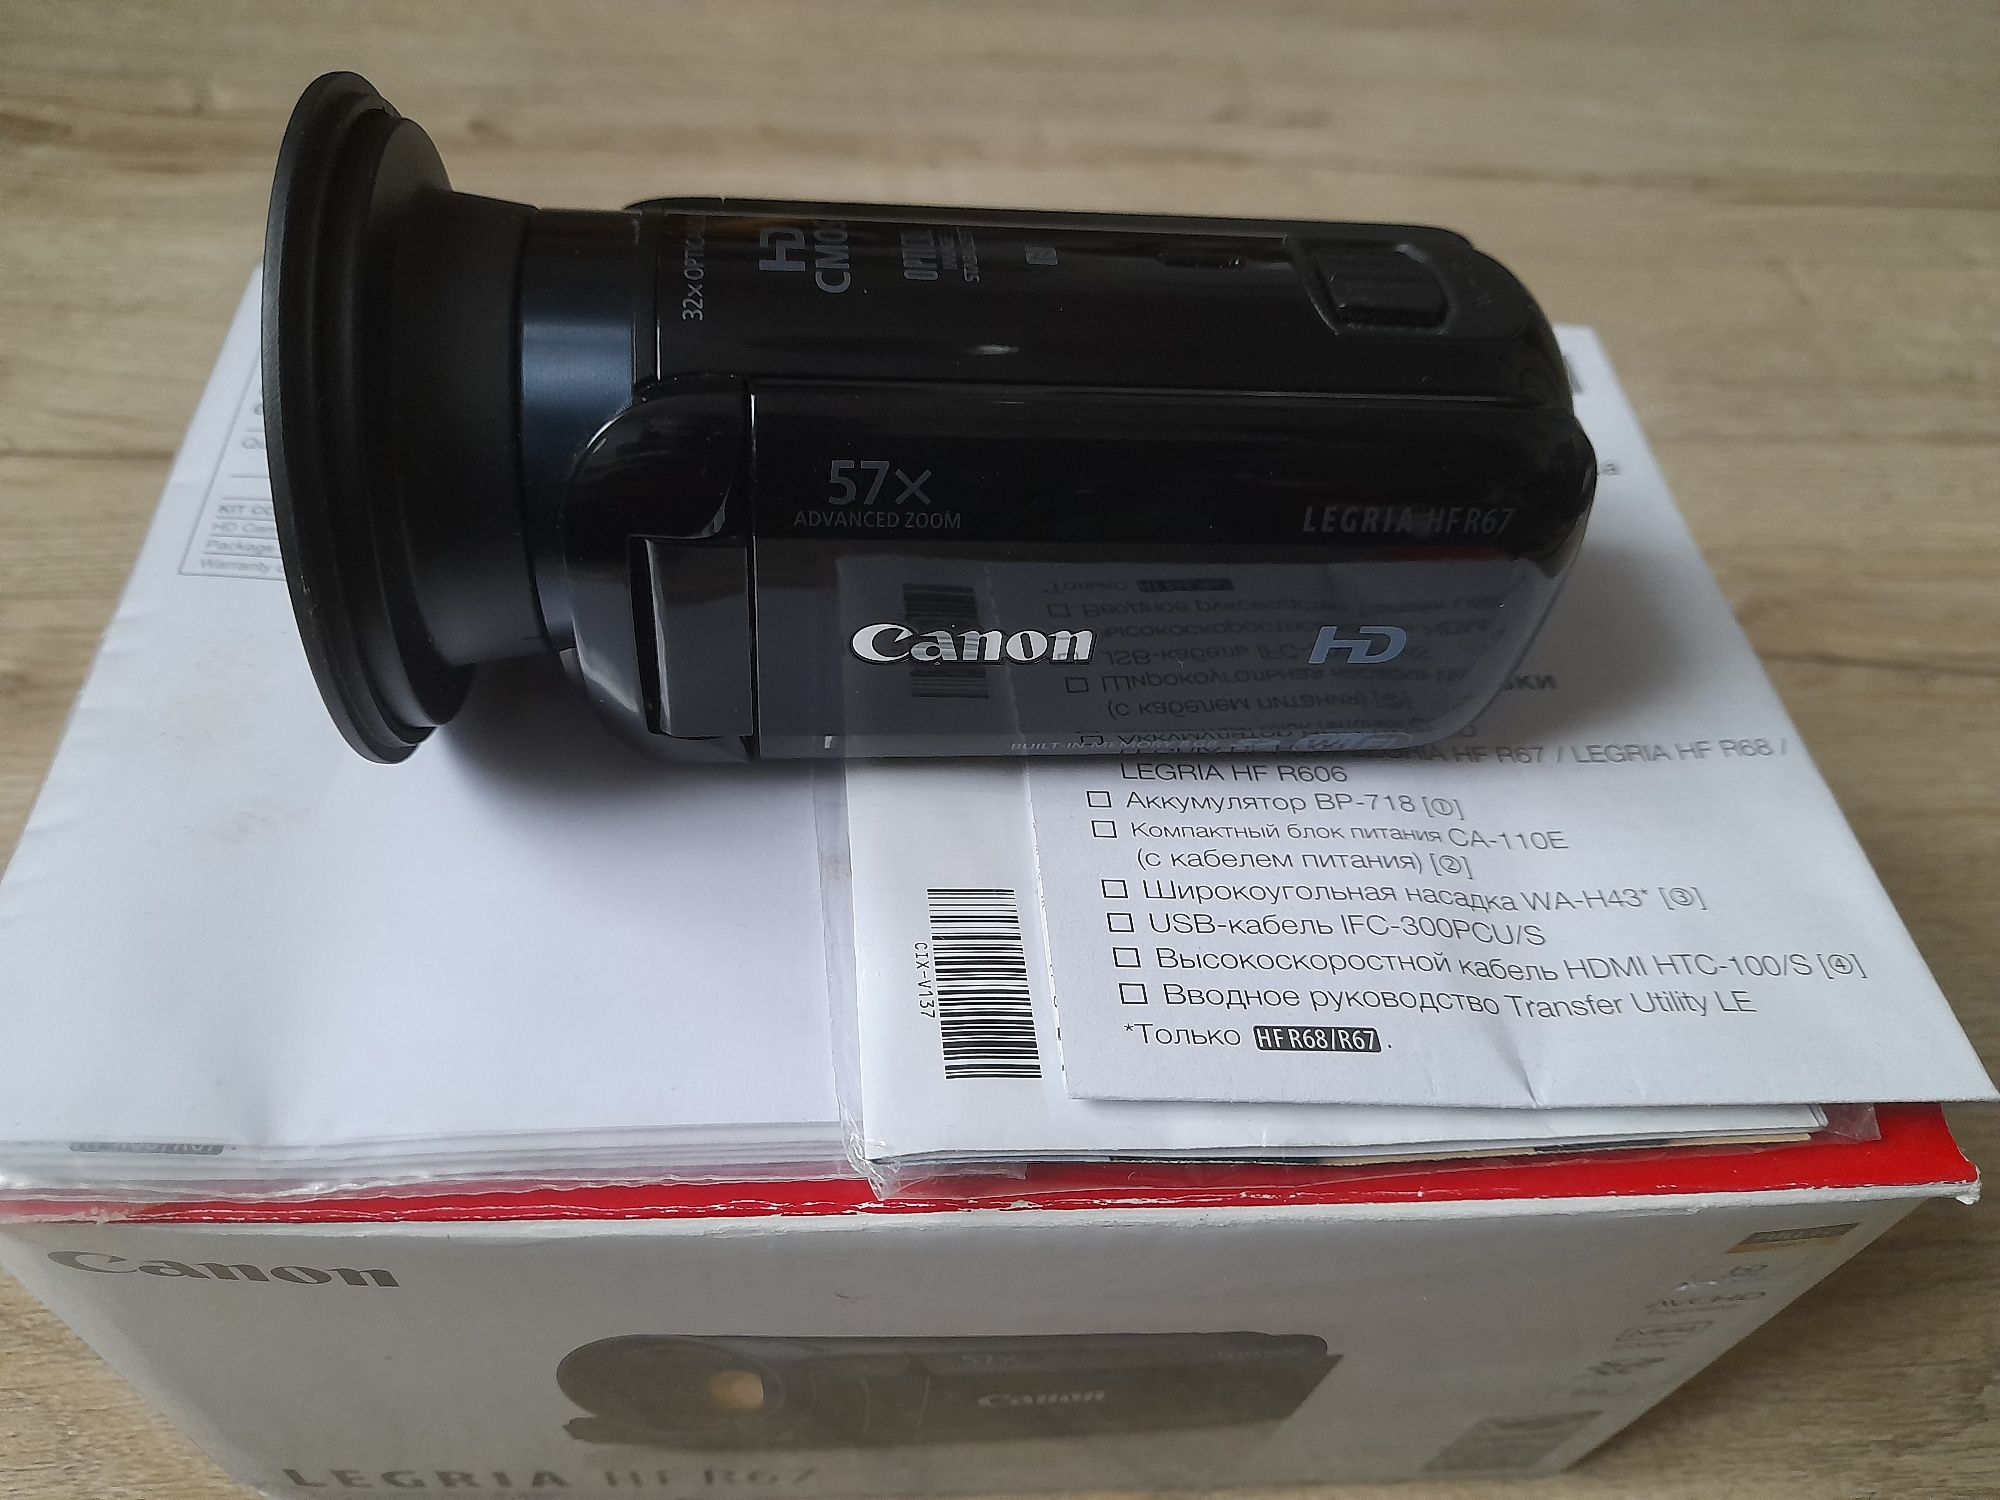 Відеокамера Canon legria nf r67